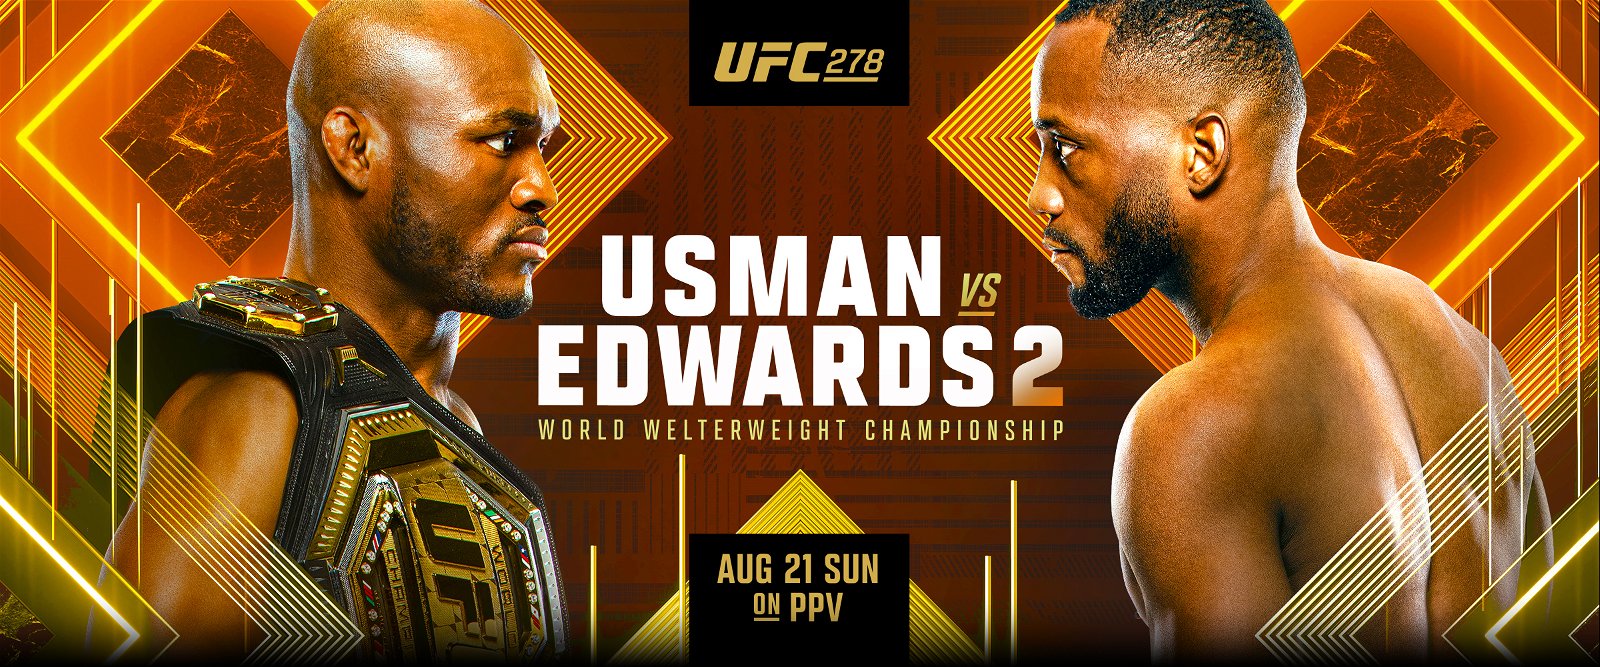 Usman vs Edwards 2 Betting